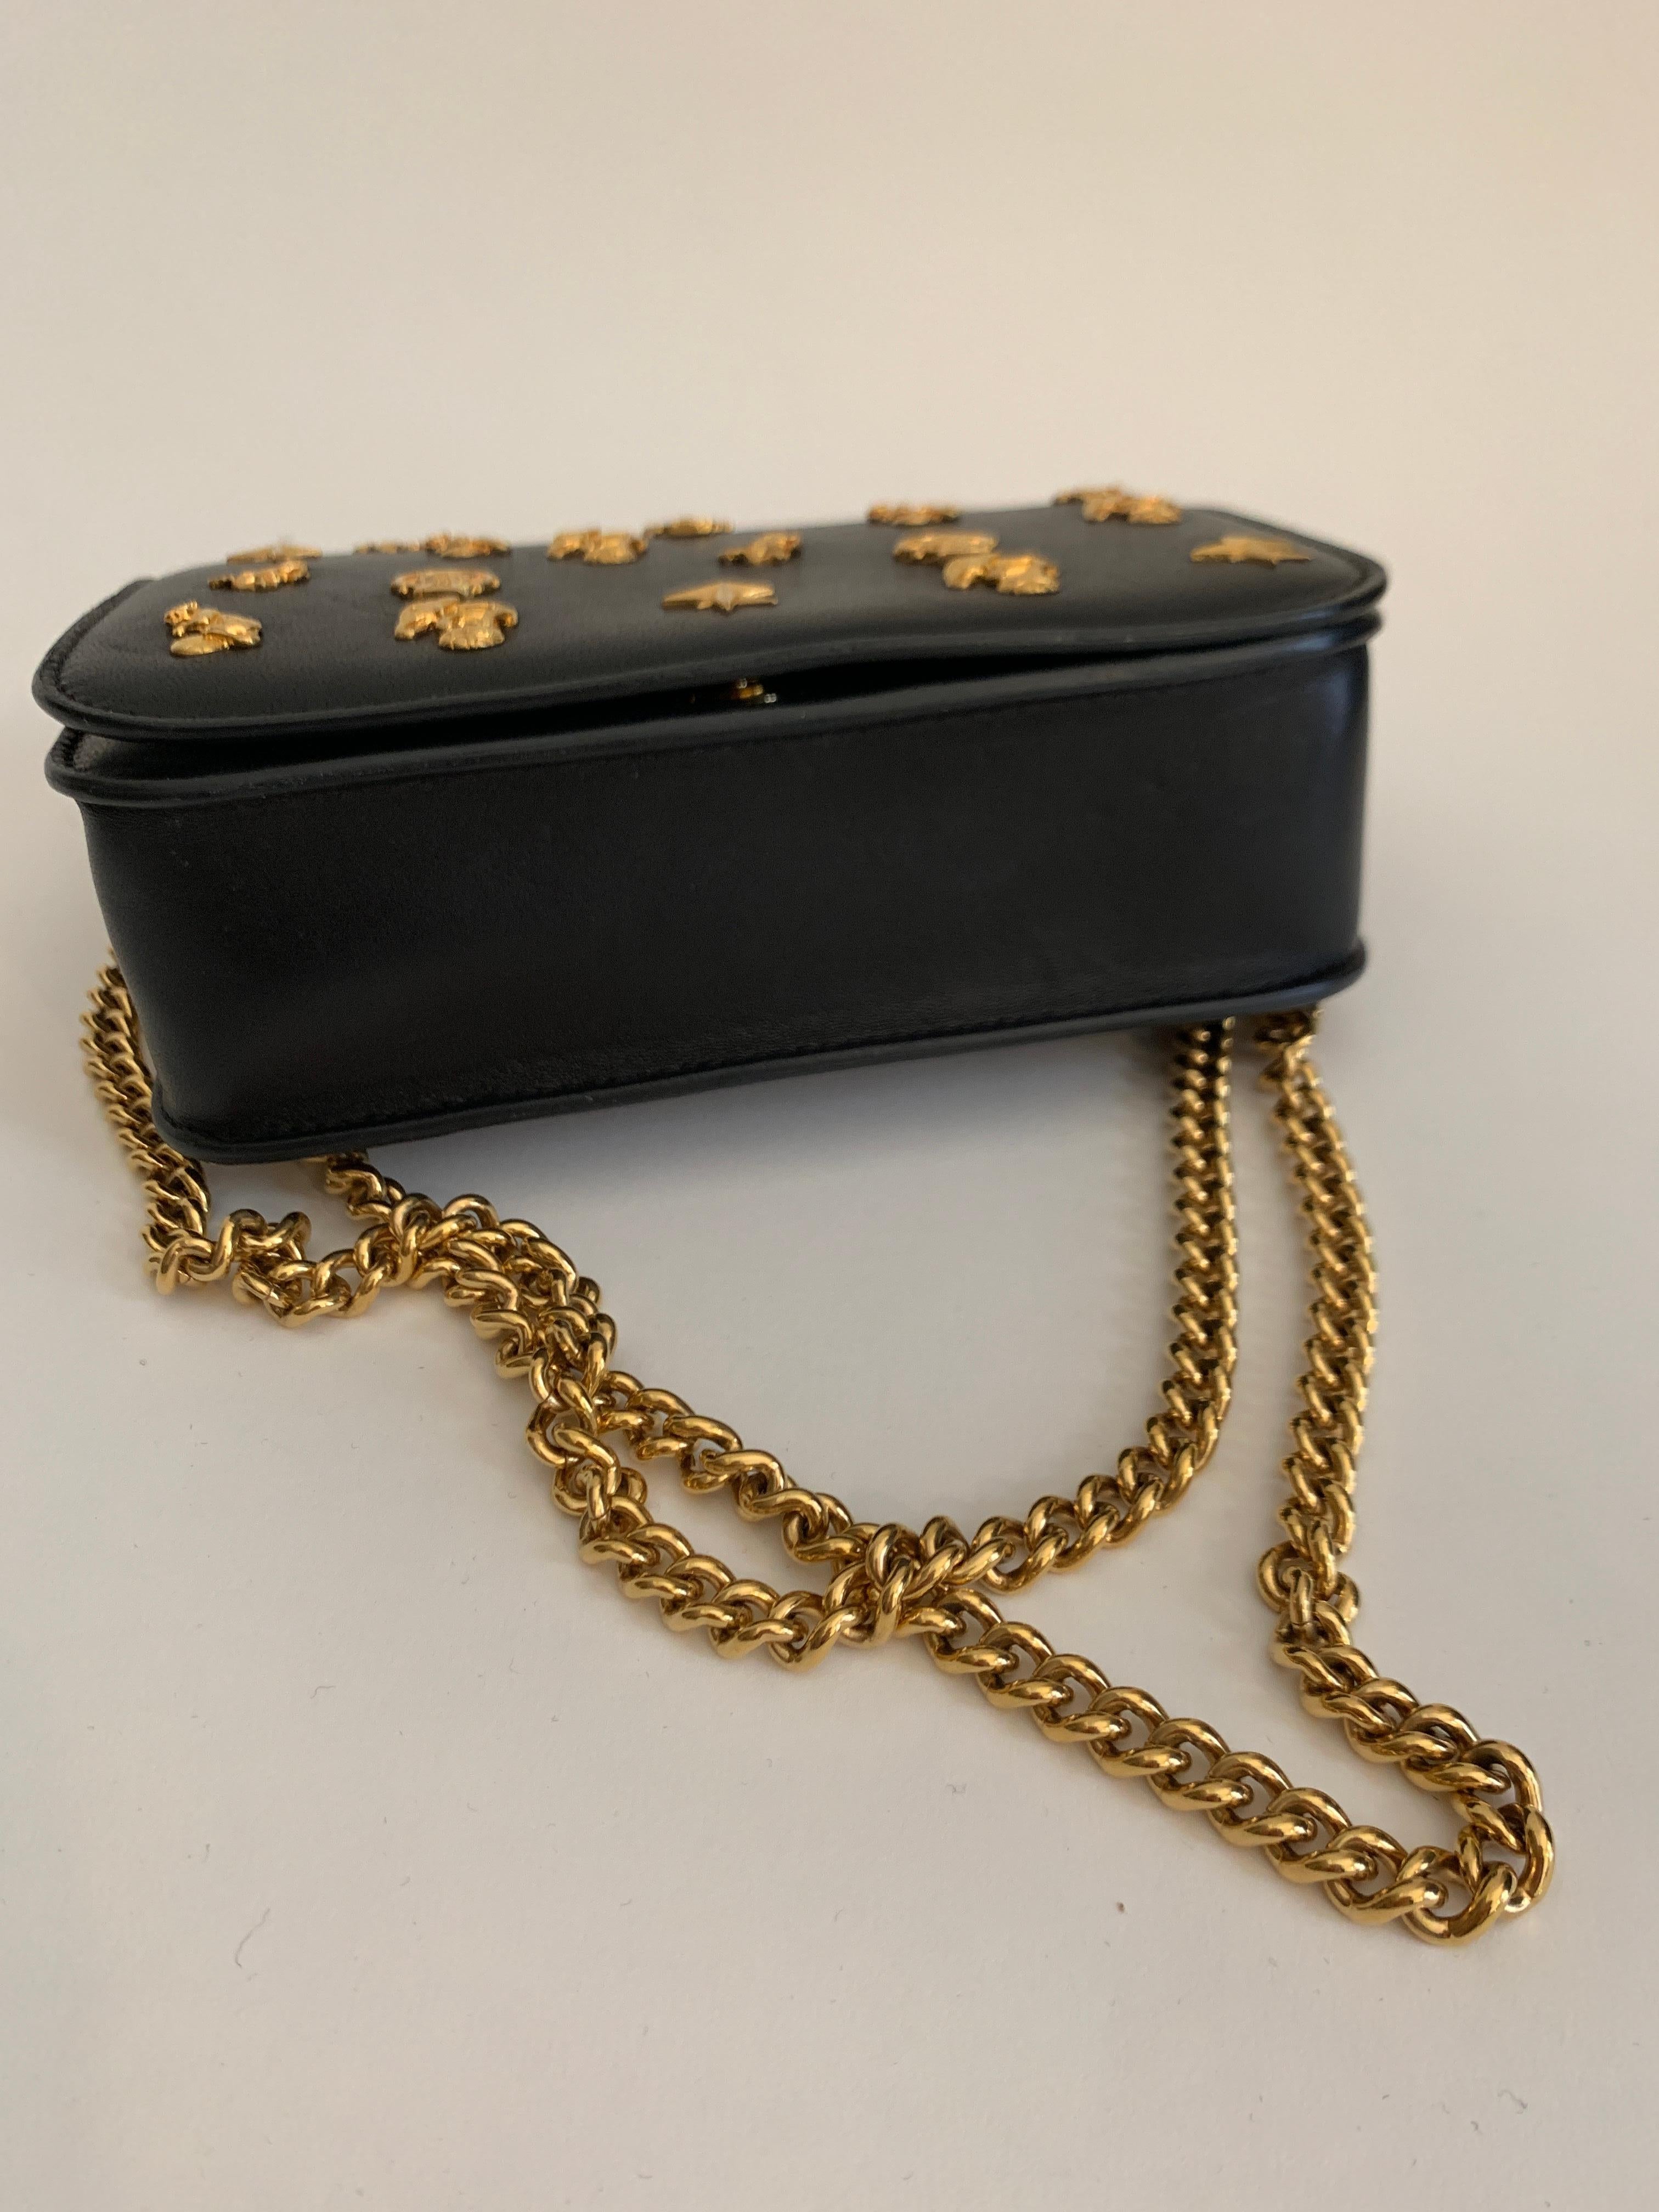 Roberto Cavalli Circus Purse Black Leather Gold Animal Embellishment Chain Strap For Sale 1